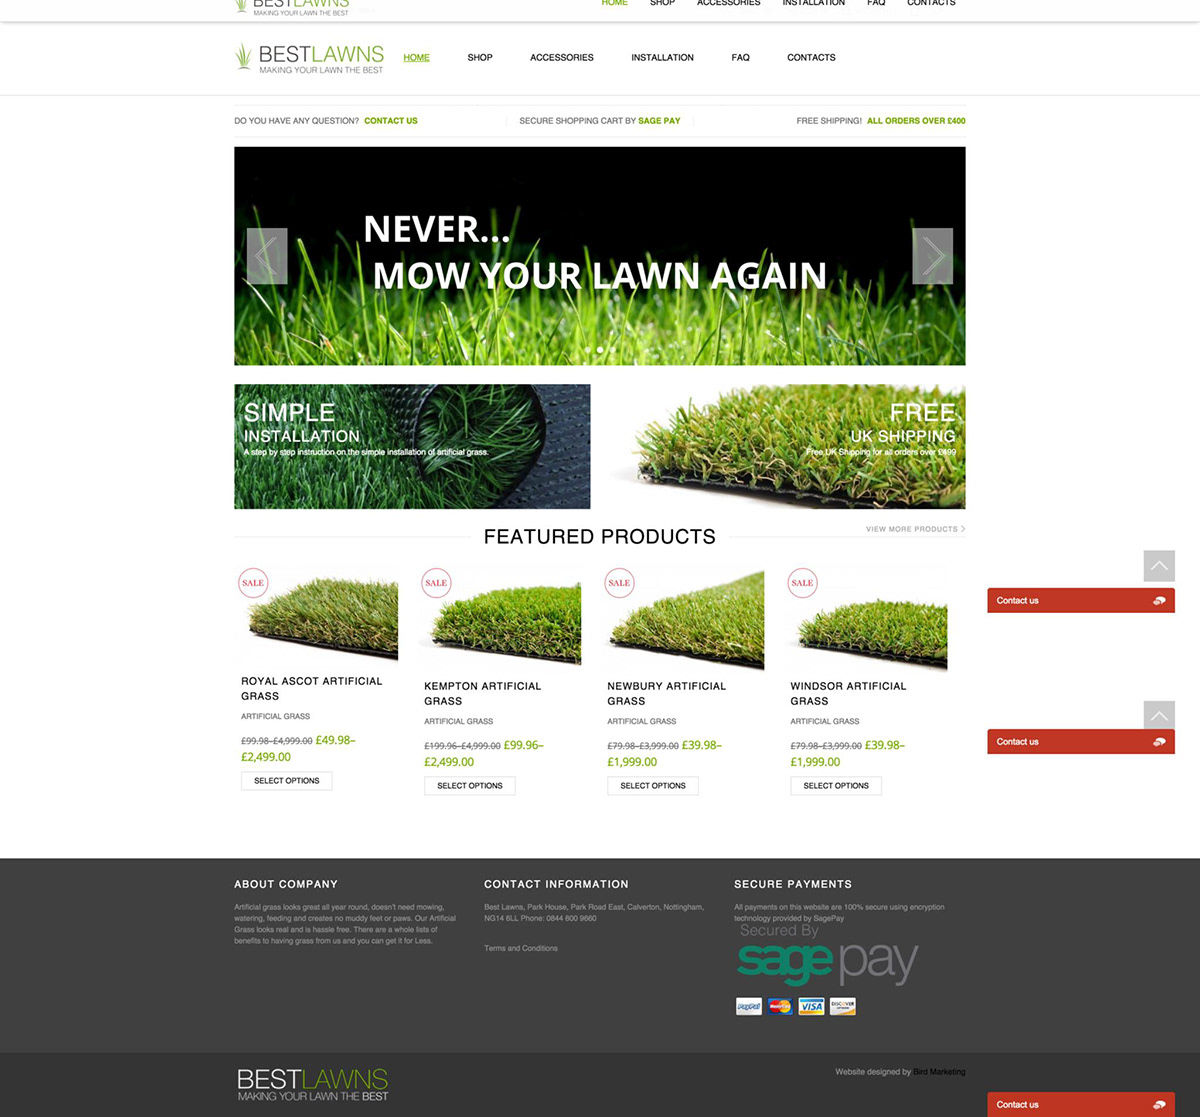 magento e-commerce Online shop bestlawns garden SEO ppc